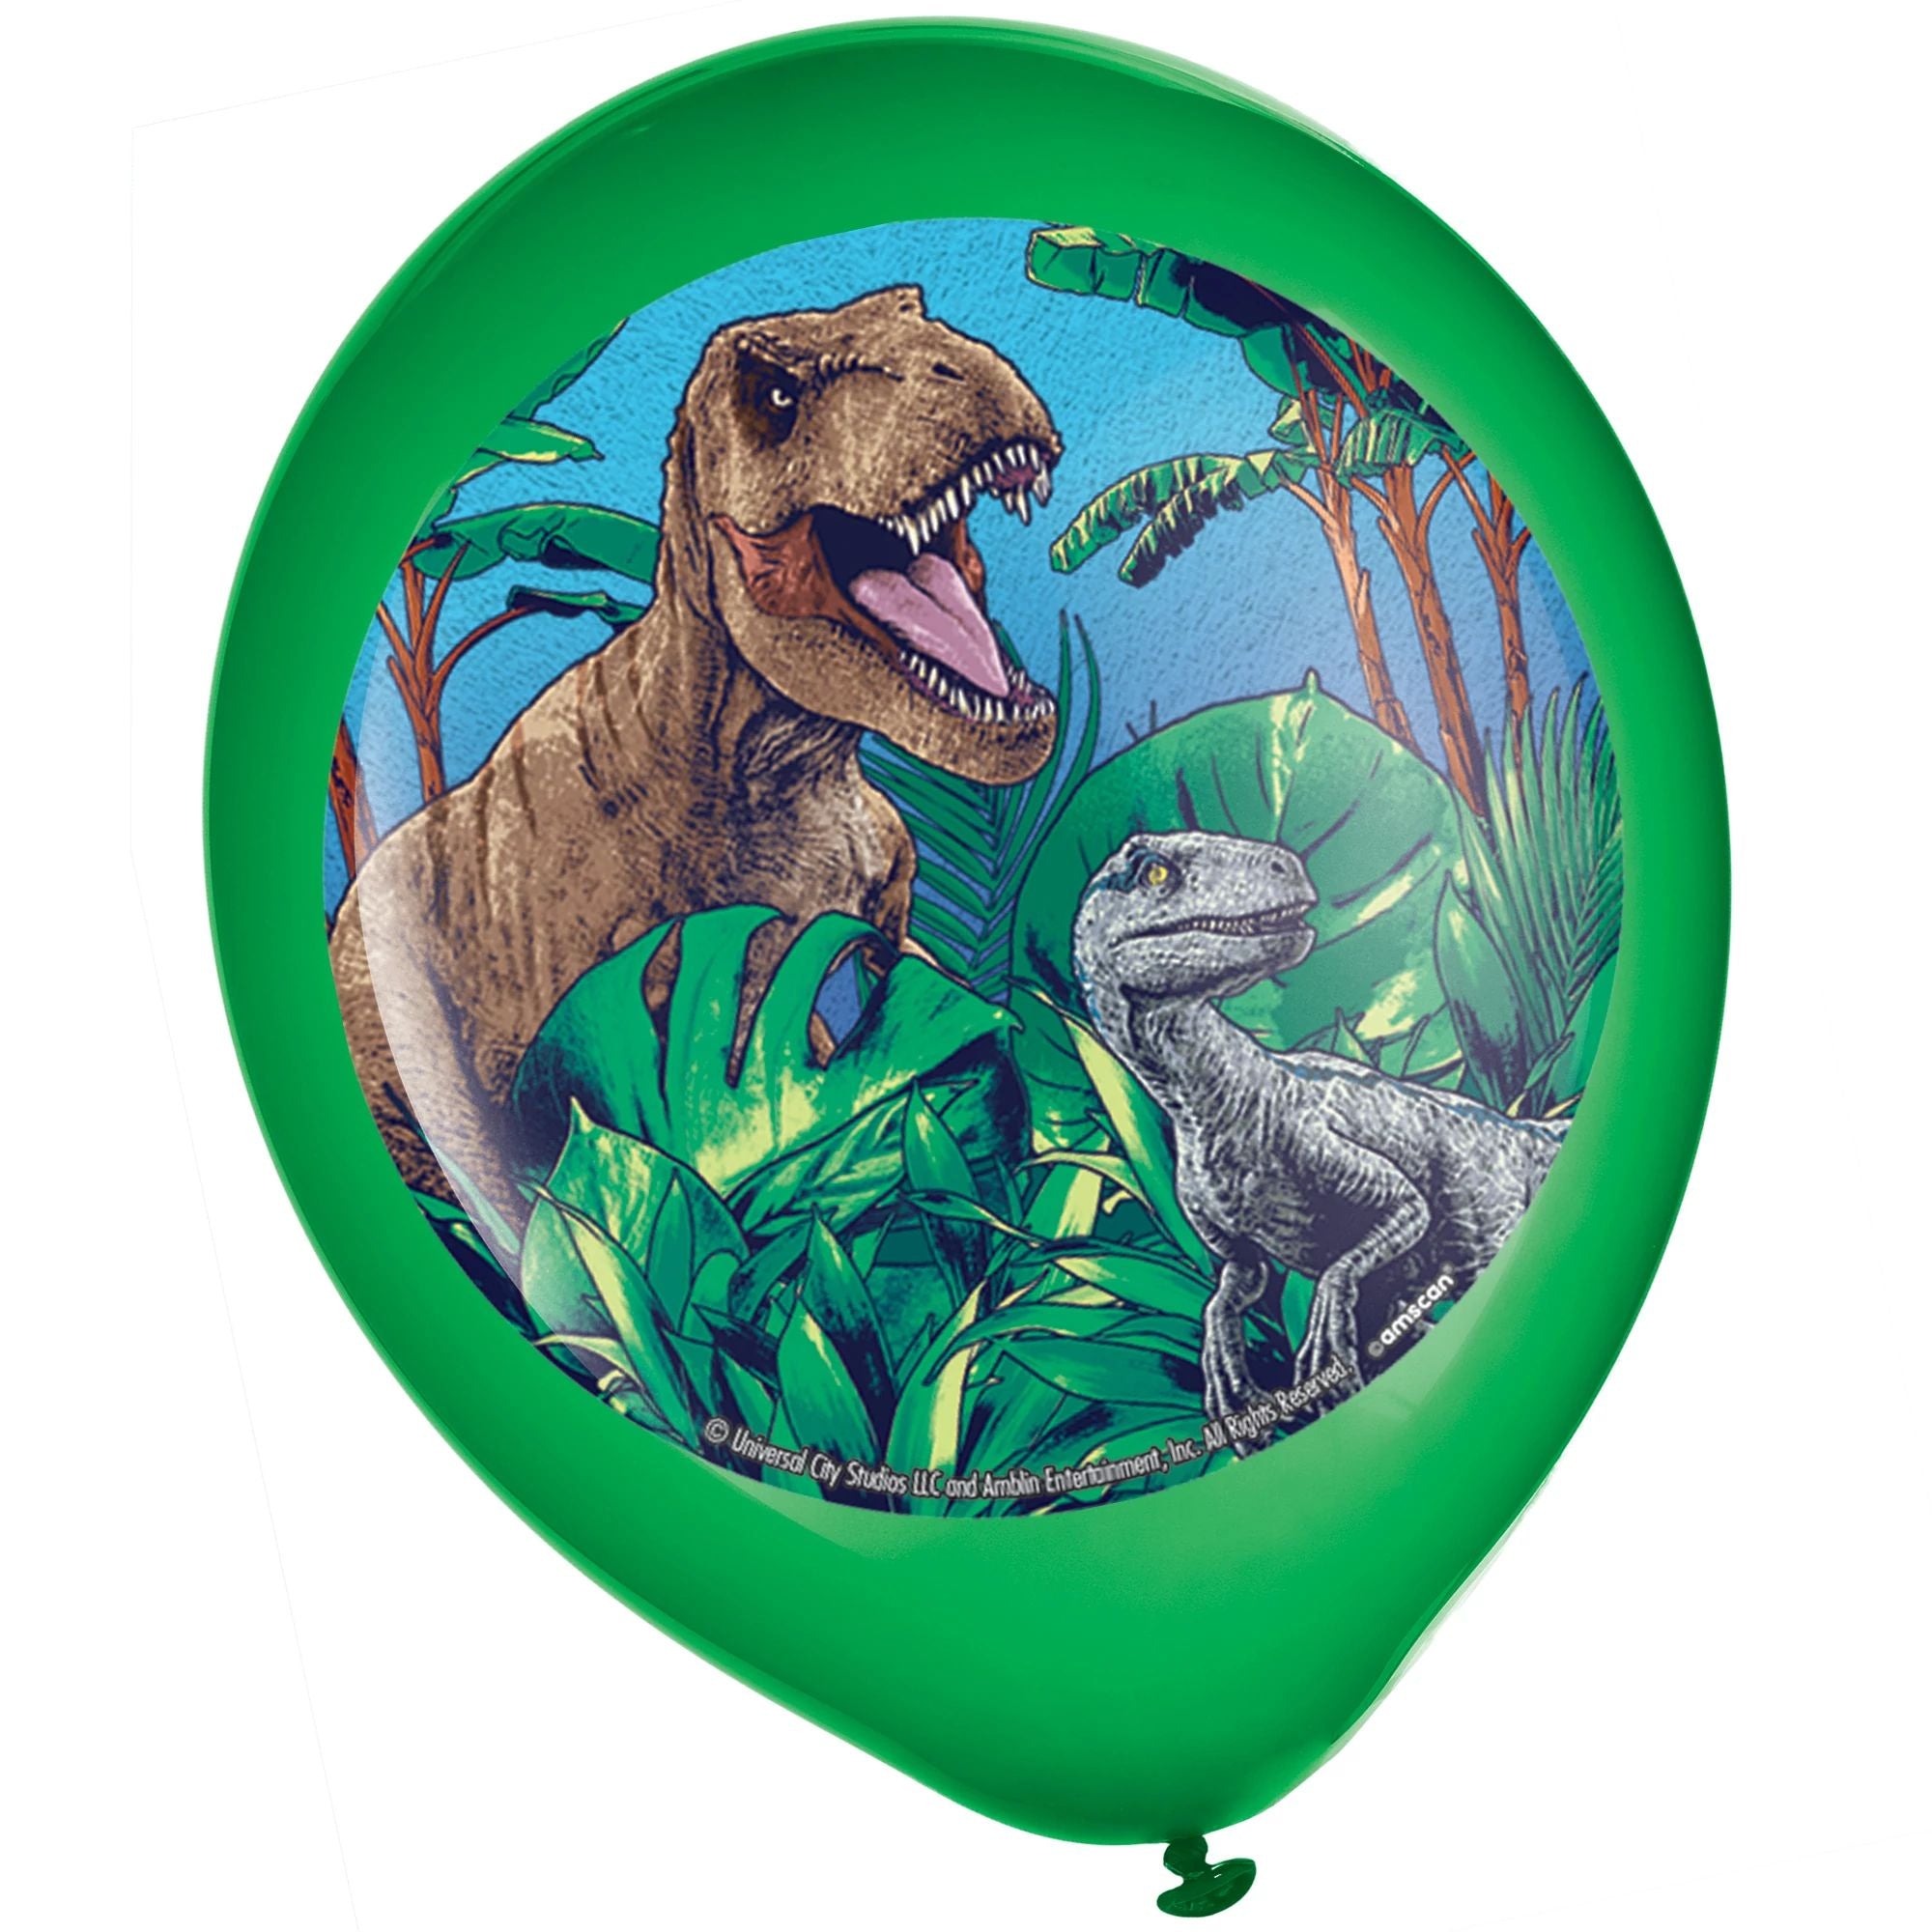 Jurassic World Into the Wild Latex Balloons, 5ct